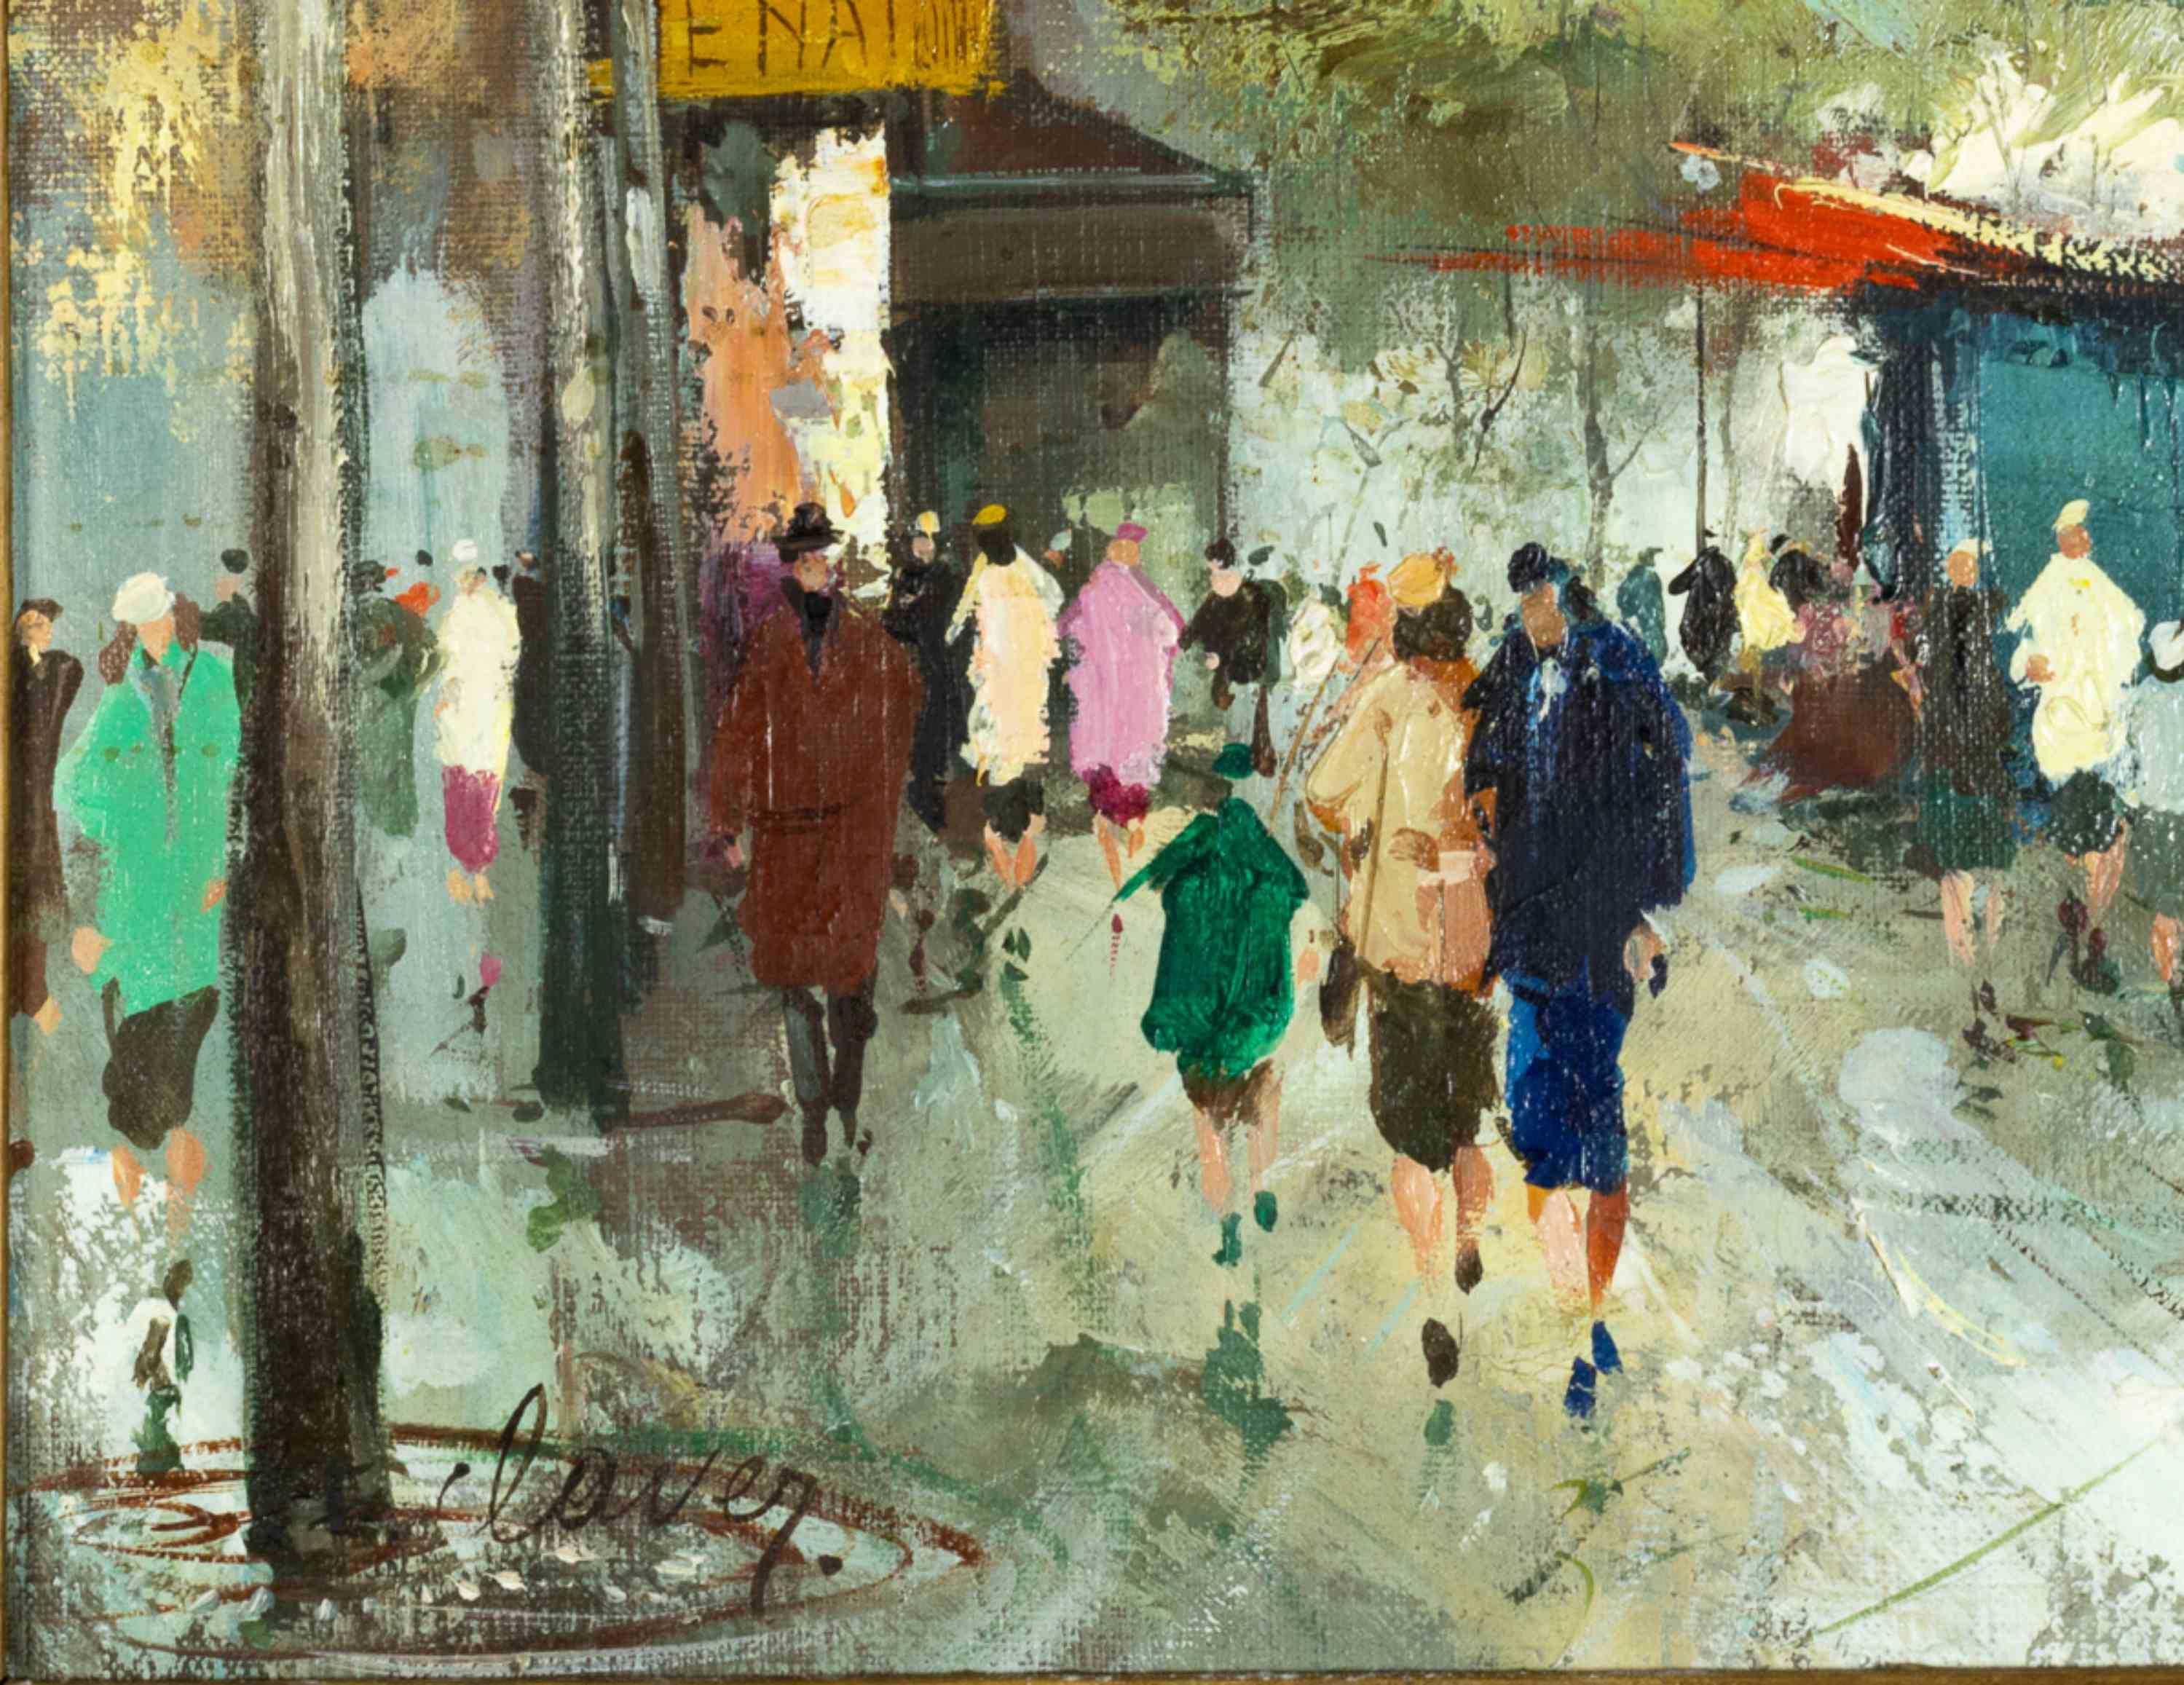 Pintura Impressionismo mercado Paris François Claver | século XX